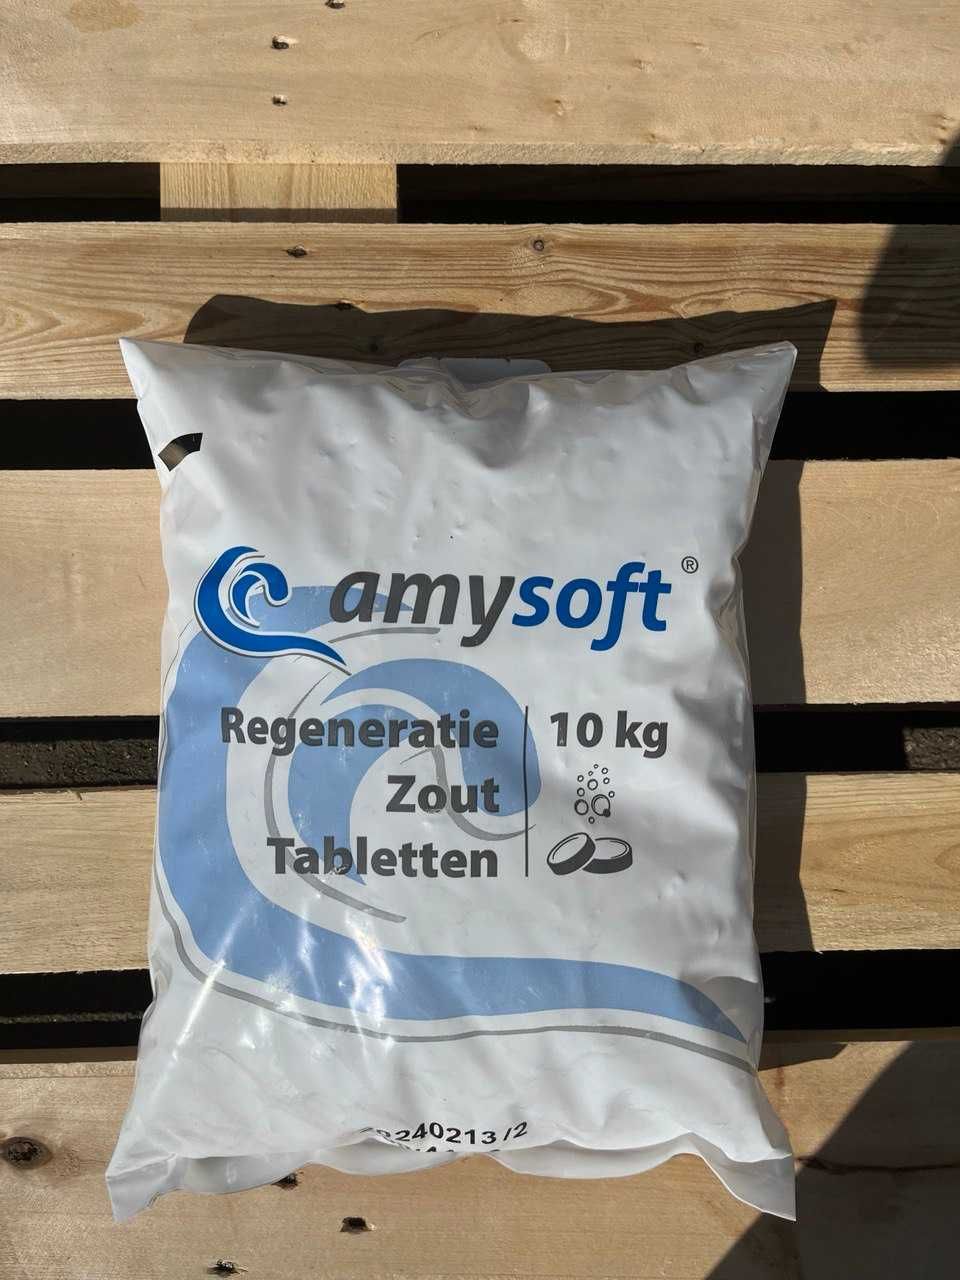 Сіль таблетована Германия для очищення води, соль таблетированная 10кг